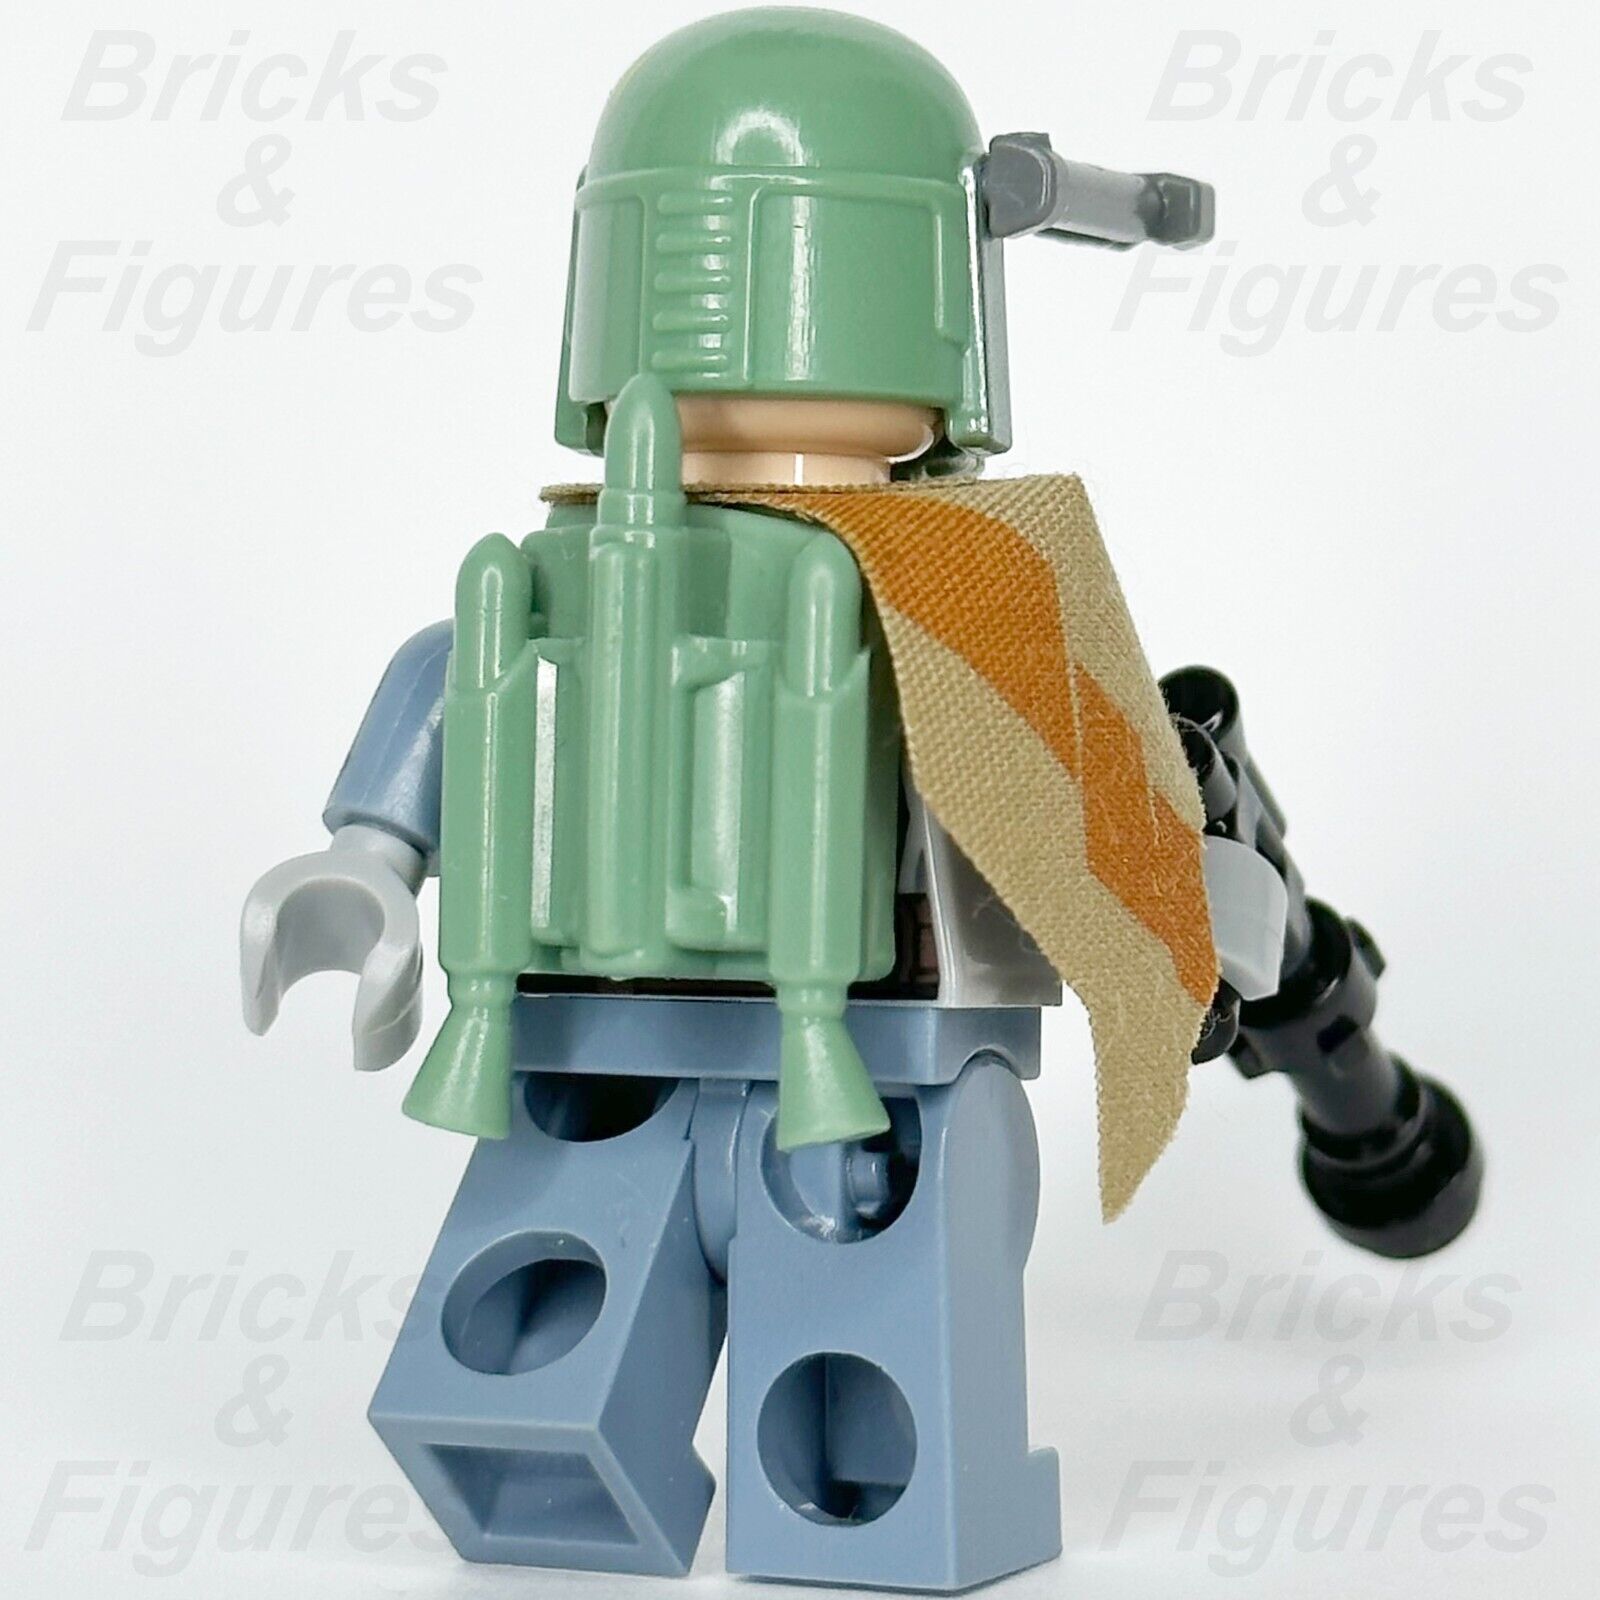 LEGO Star Wars Boba Fett Minifigure w/ Pauldron Cape Mandalorian 75060 sw0610 - Bricks & Figures